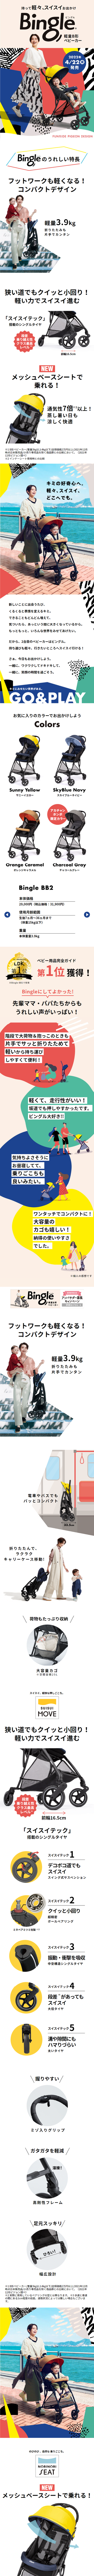 Bingle_sp_1